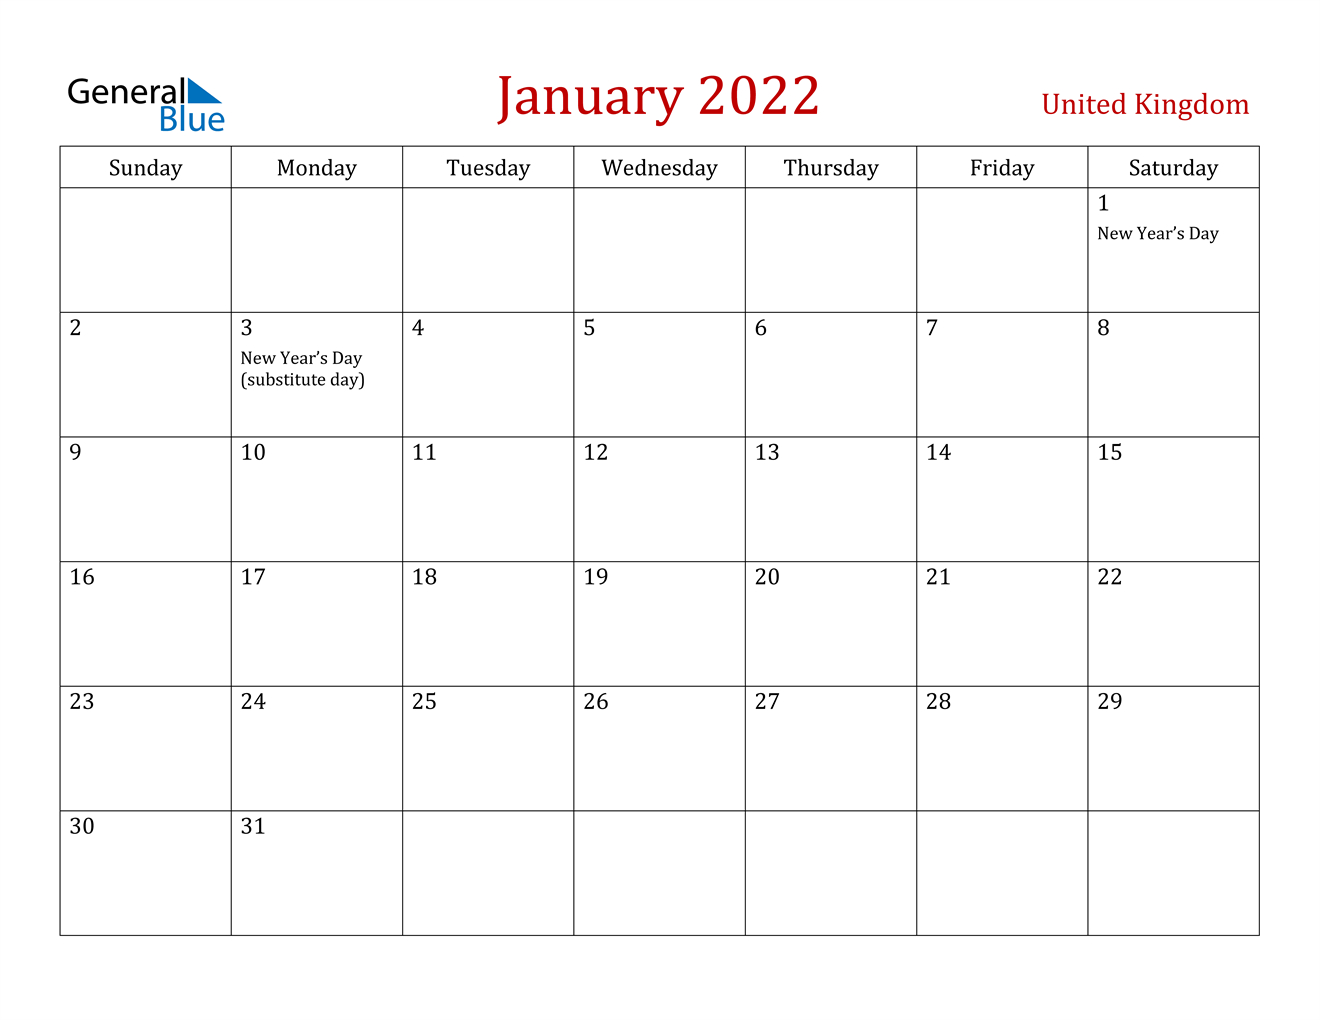 January 2022 Calendar - United Kingdom